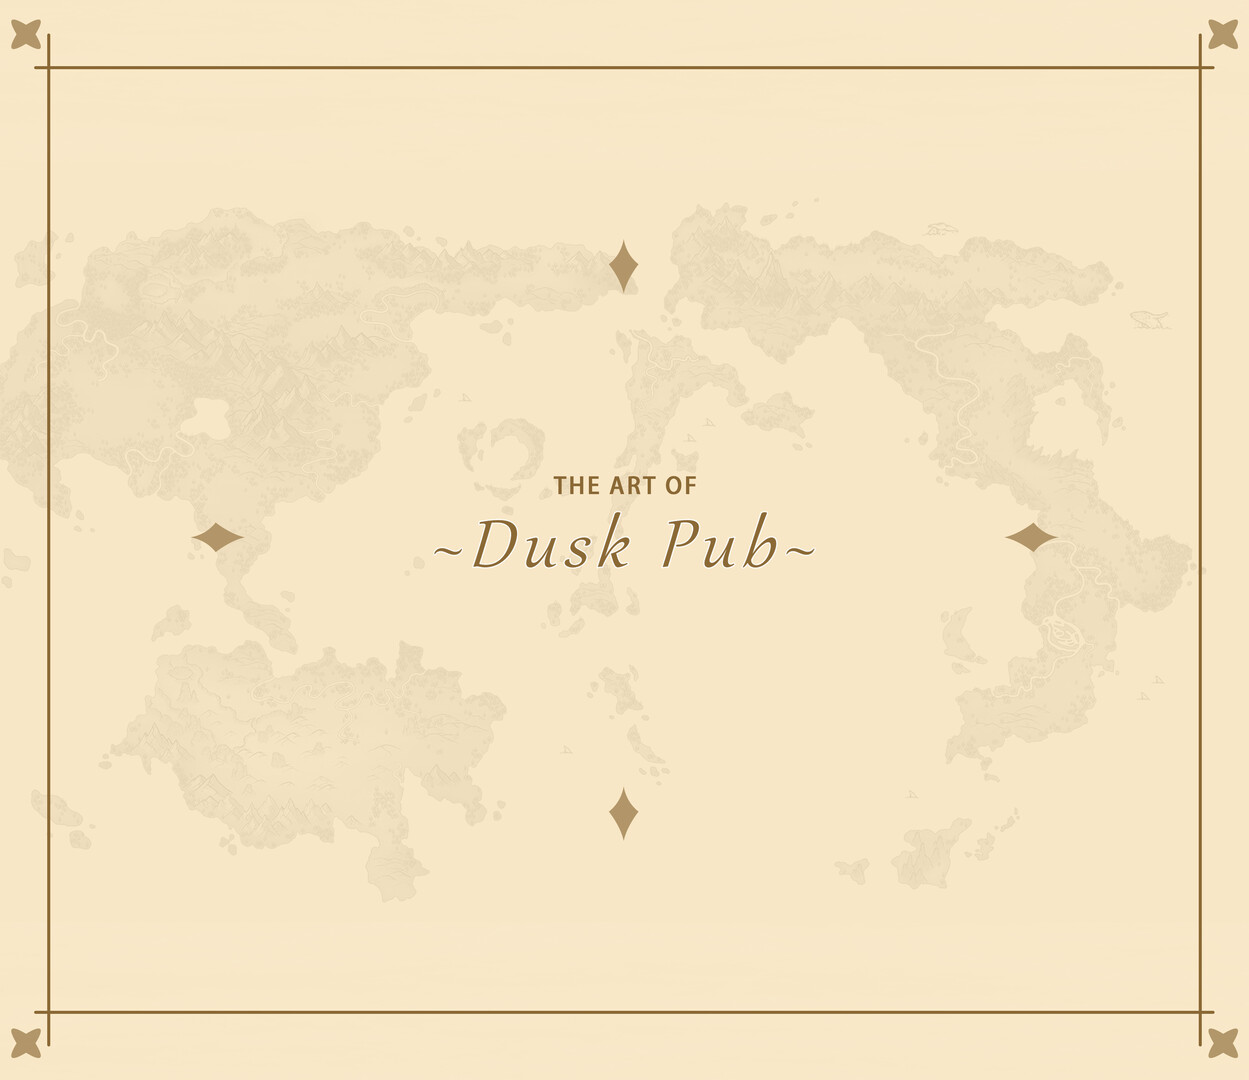 Dusk Pub - Artbook Featured Screenshot #1